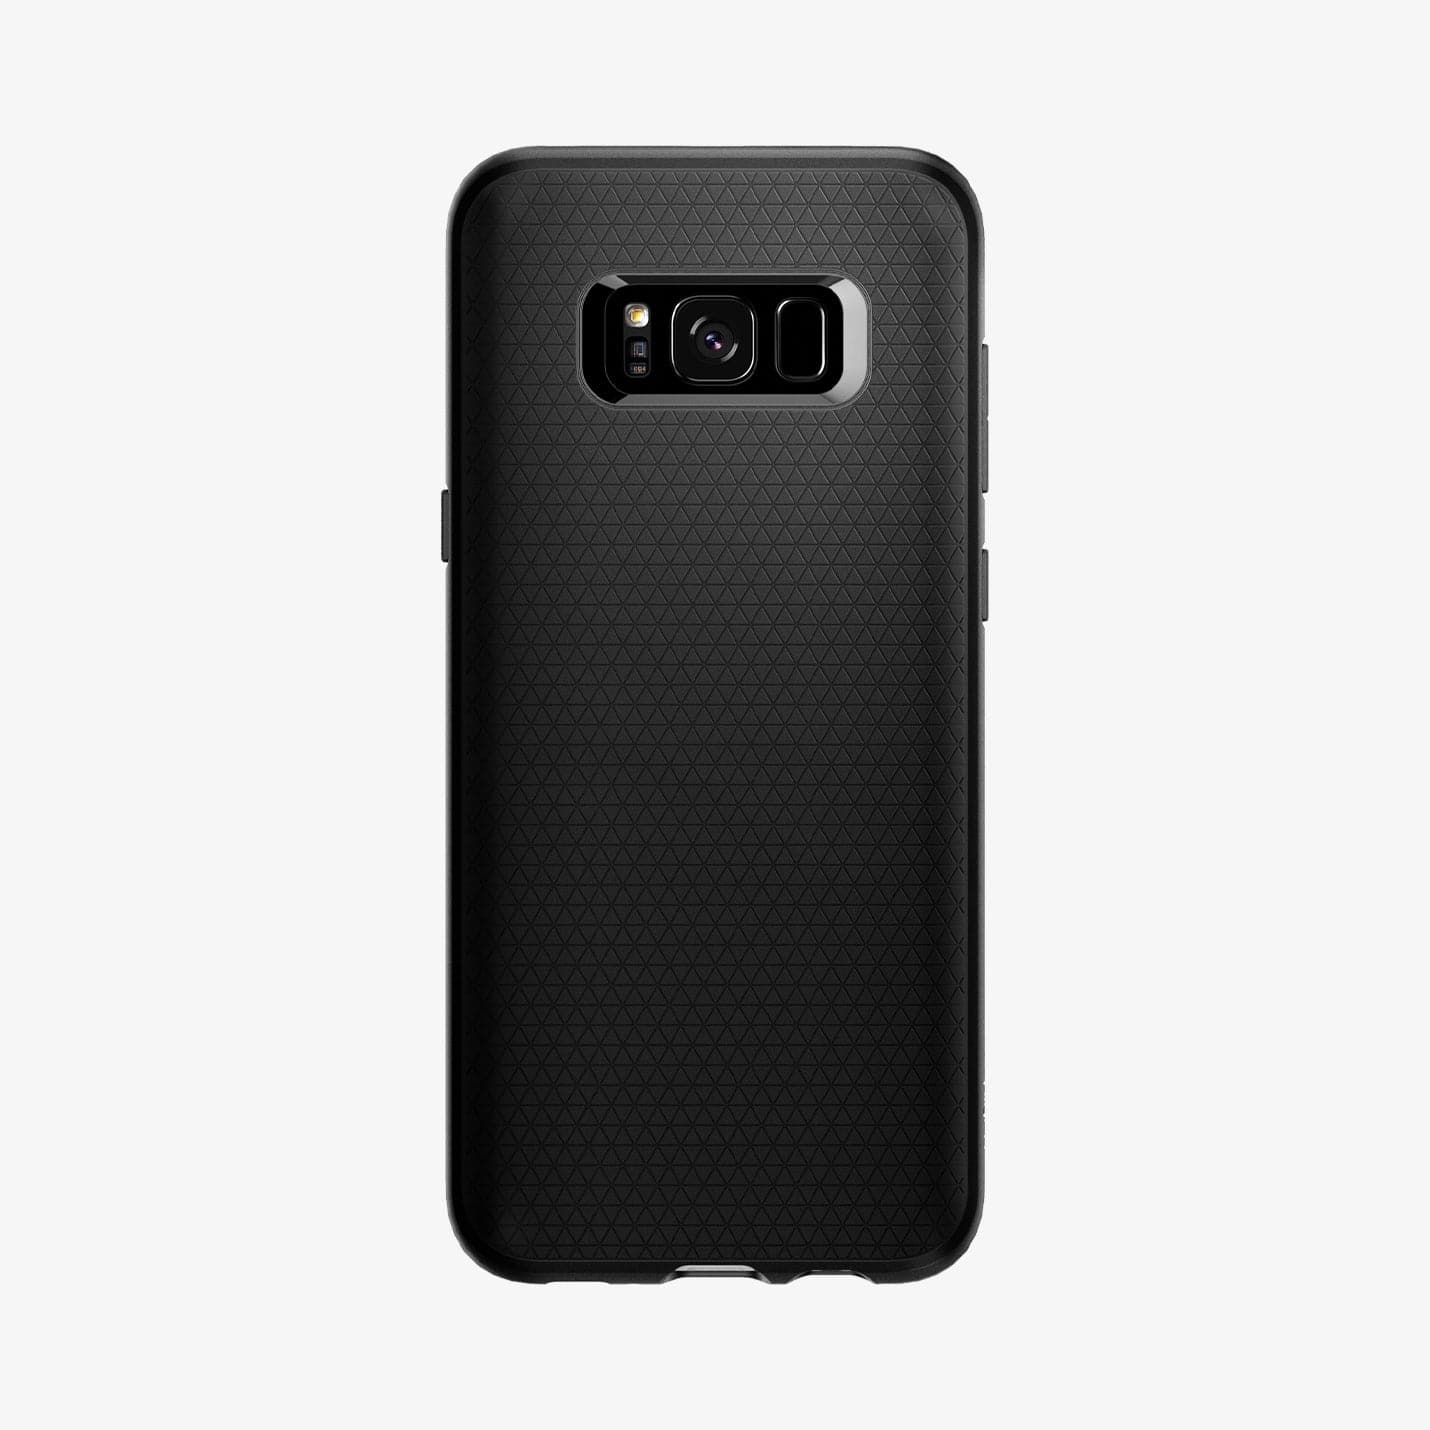 571CS21663 - Galaxy S8 Series Liquid Air Case in black showing the back